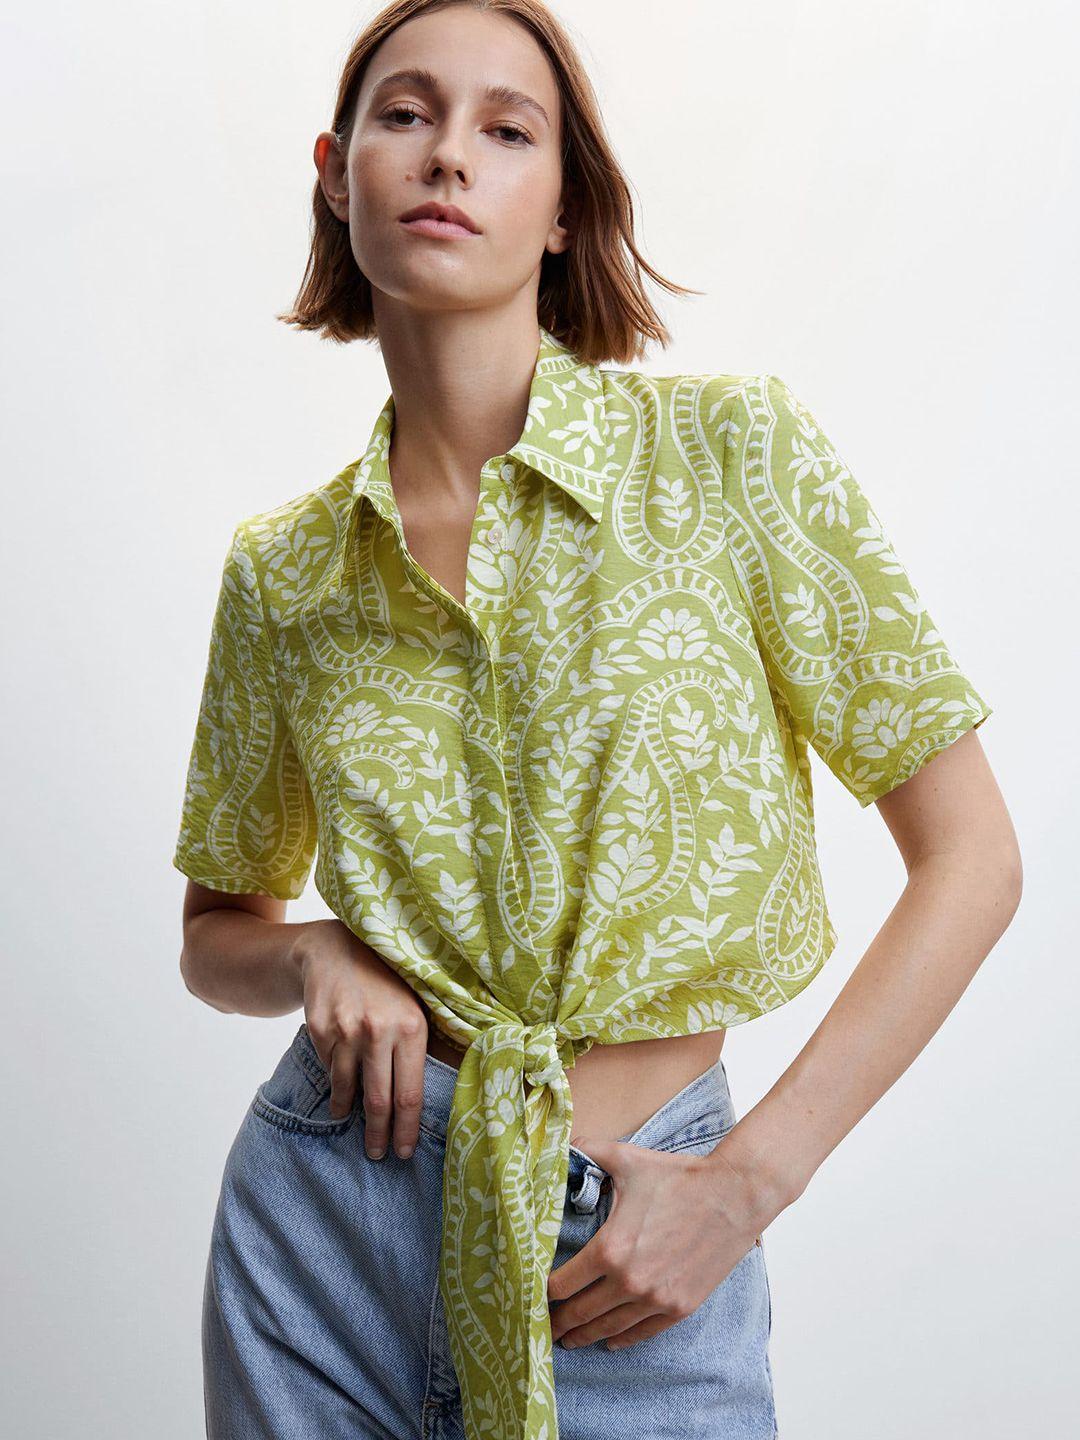 mango ethnic motifs printed sustainable shirt style crop top